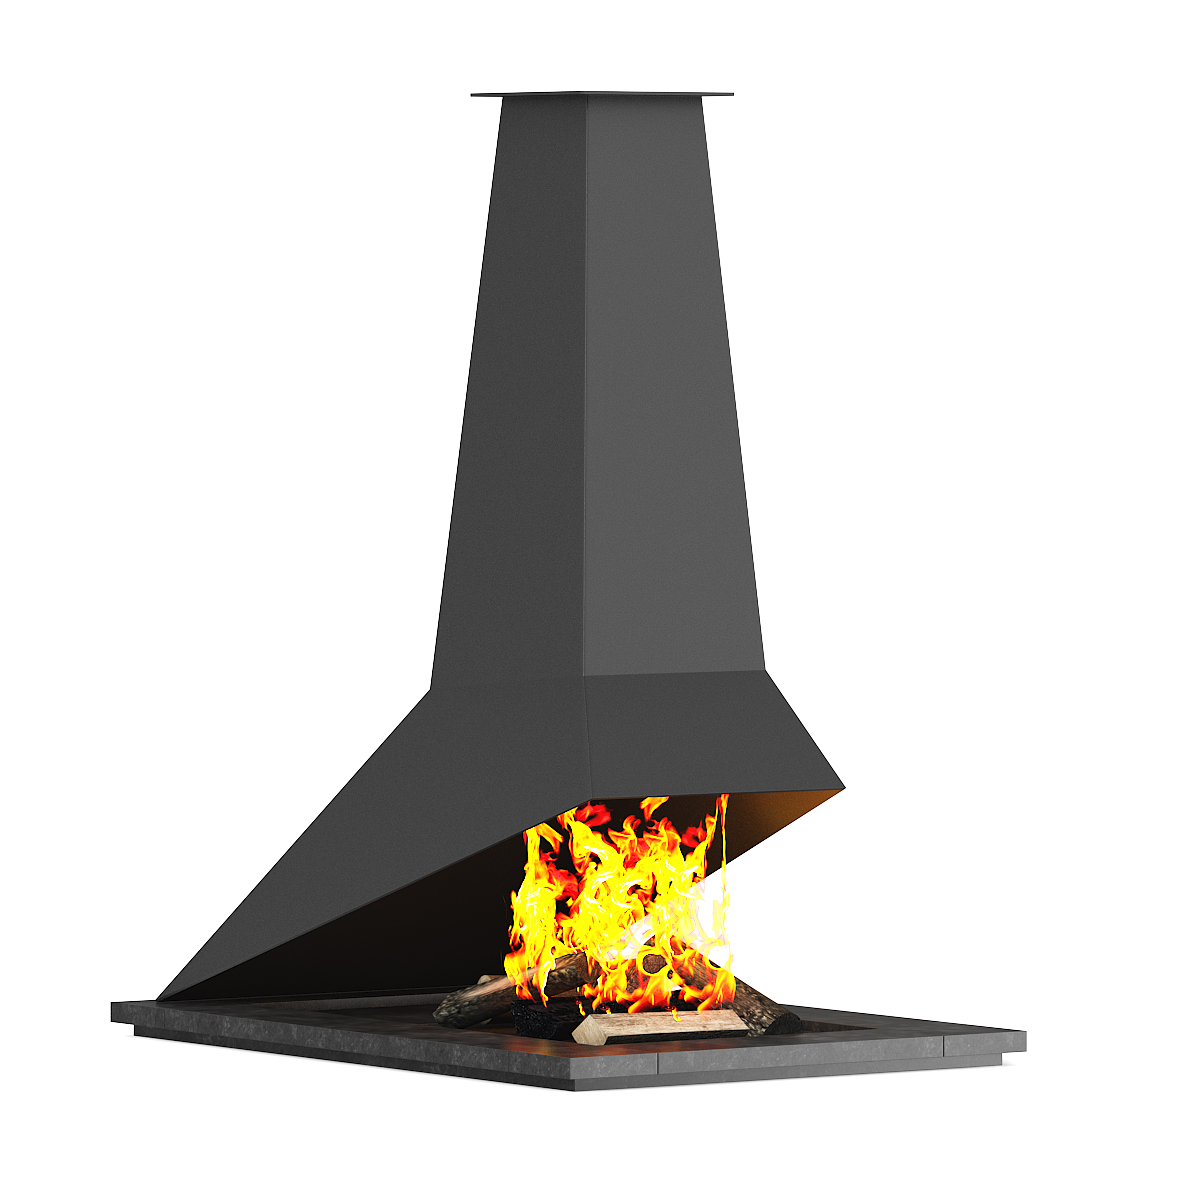 CGAxis Models Volume 45 3D Fireplaces + Render Scene